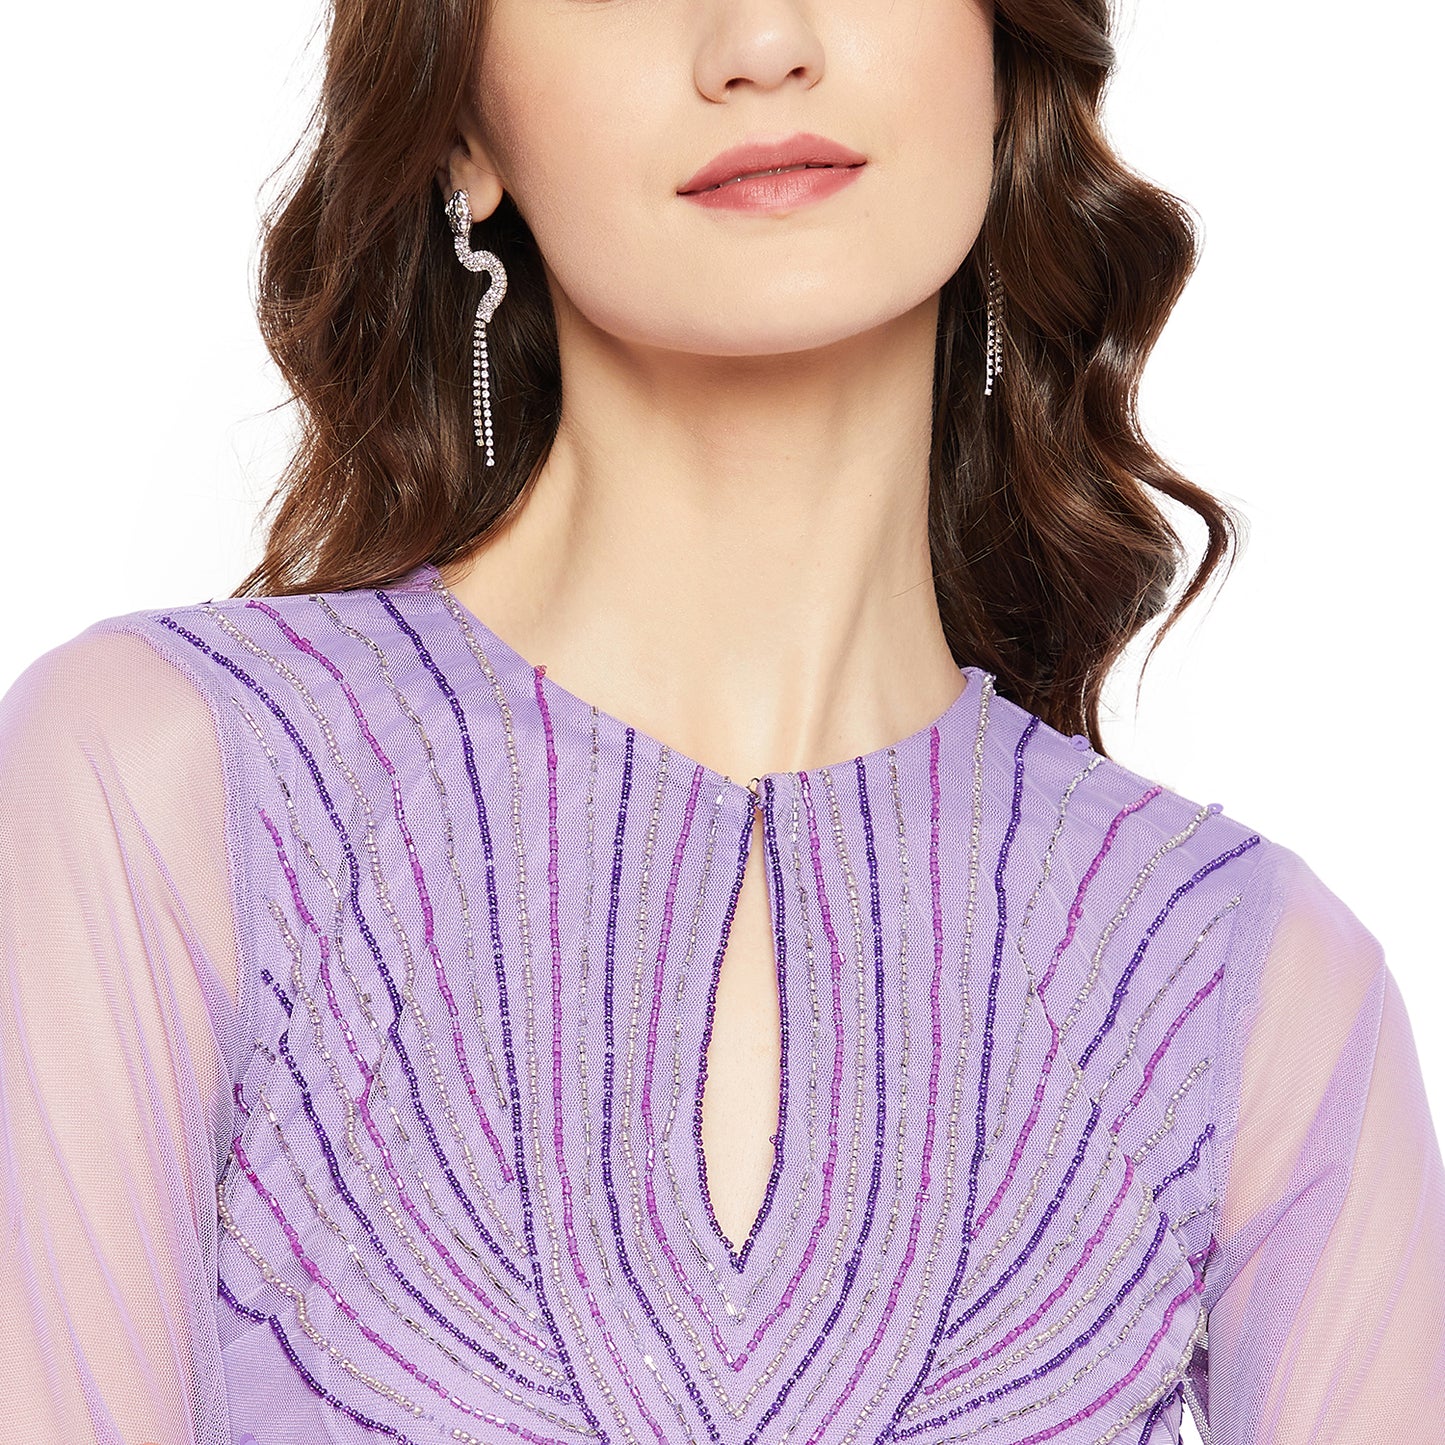 LY2 Women Lilac Embellished Long Dress